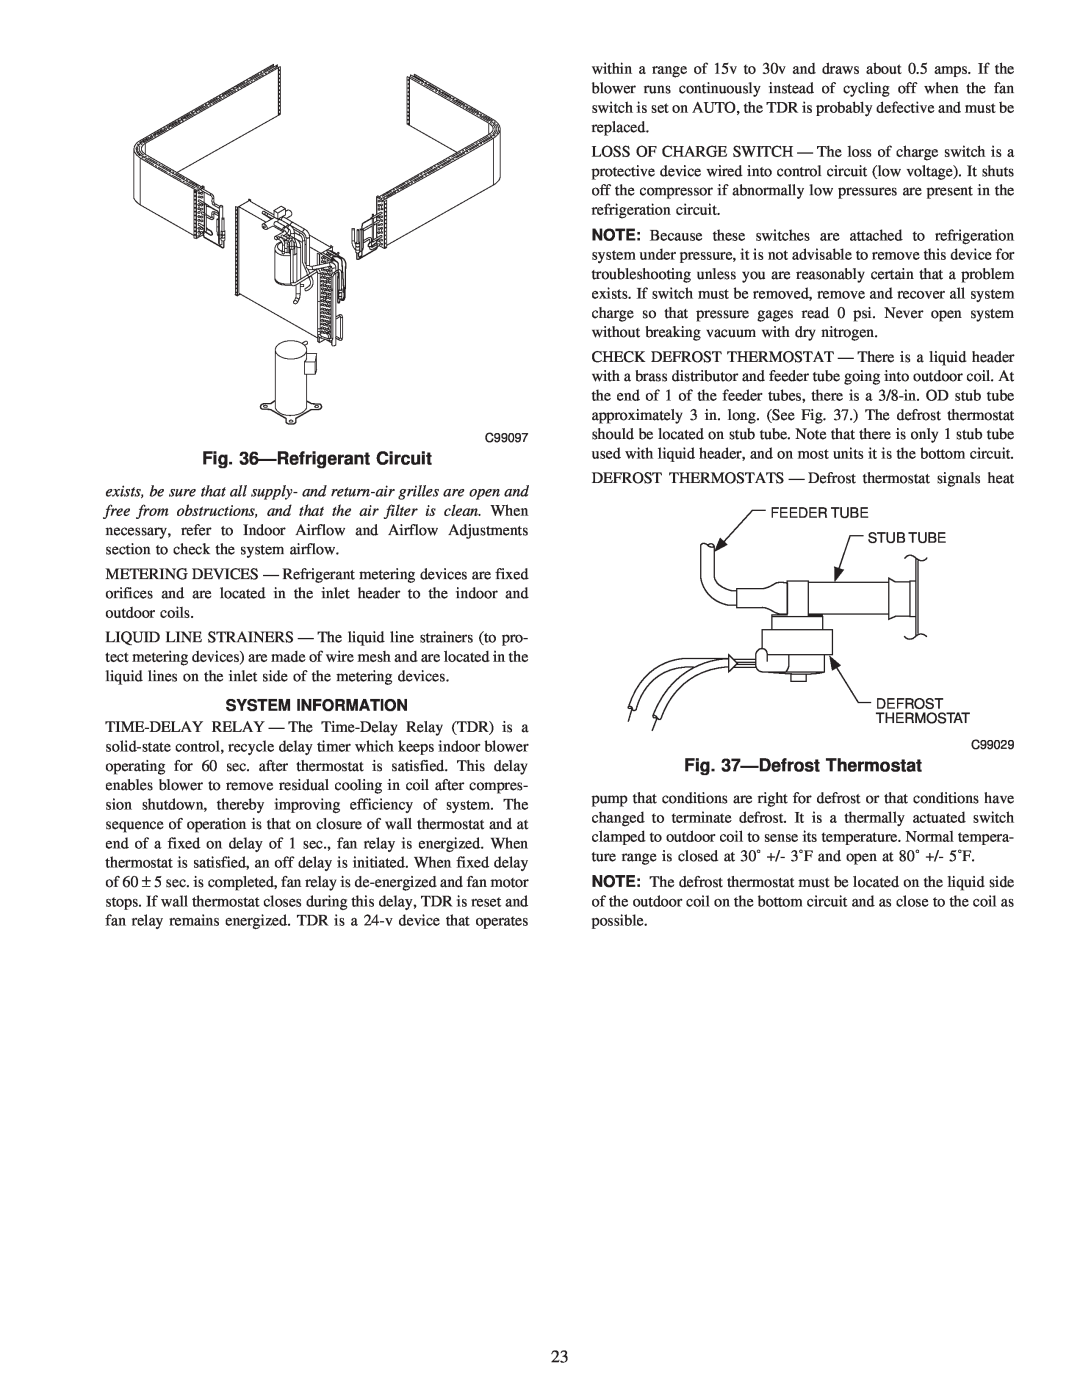 Carrier 50JS instruction manual ÐRefrigerant Circuit, ÐDefrost Thermostat, System Information 